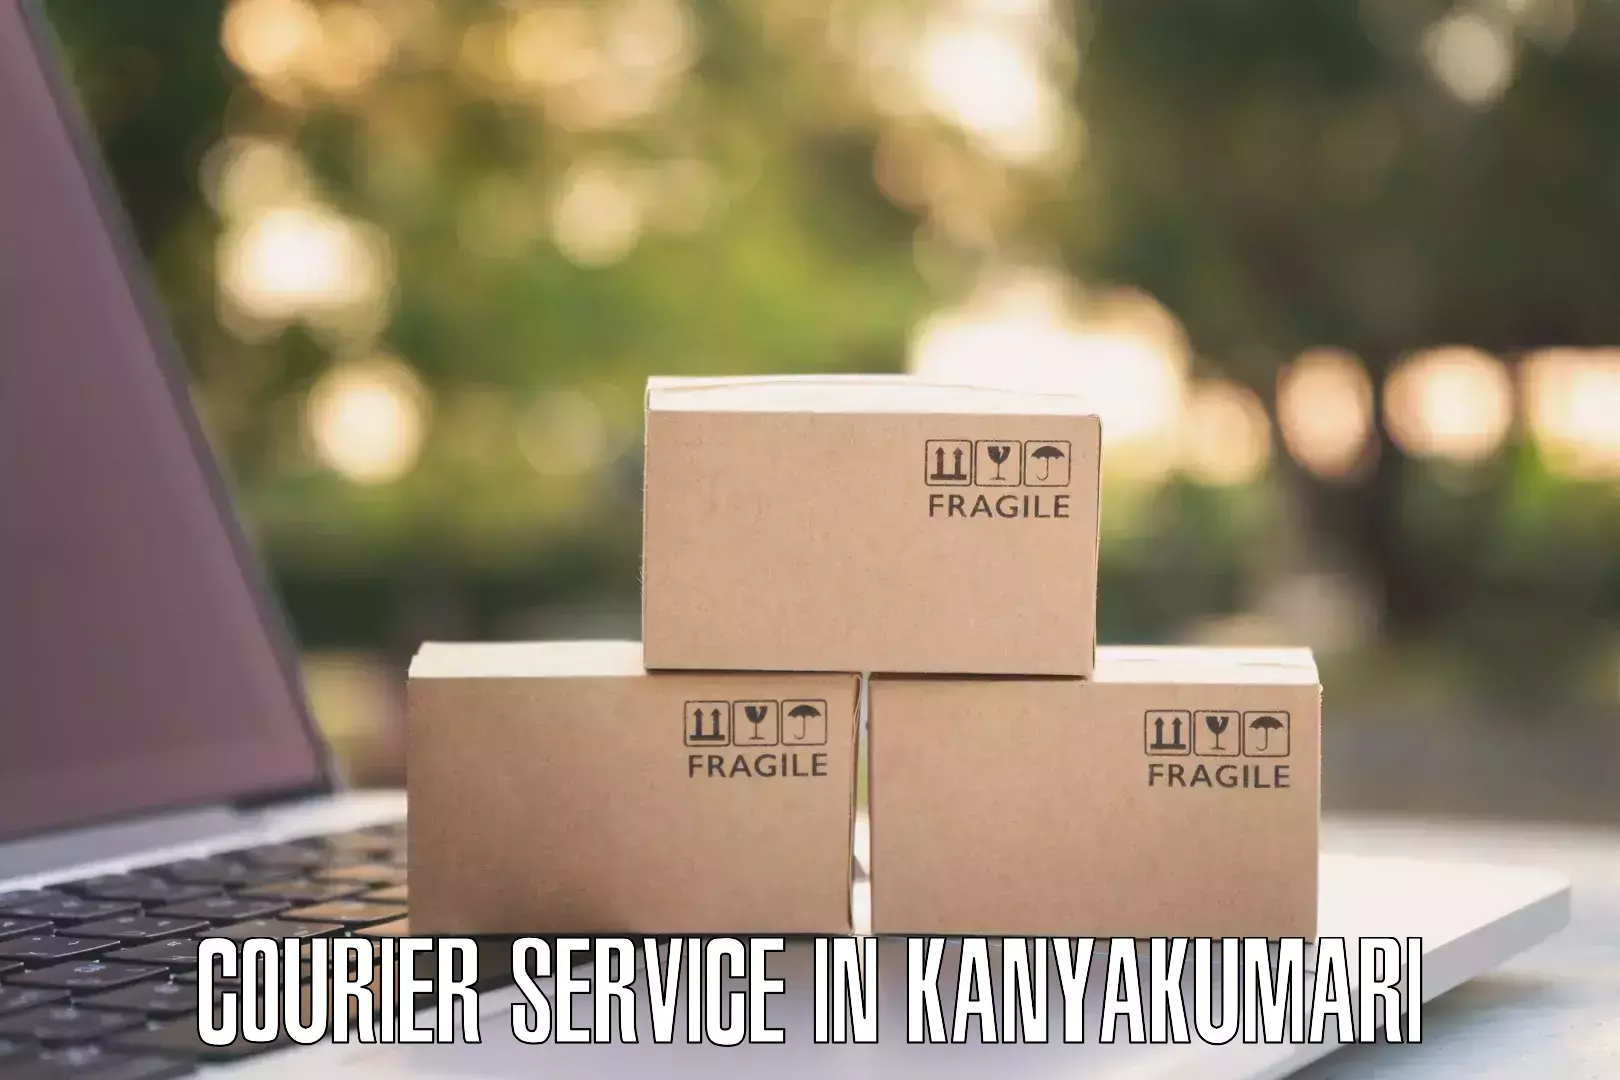 Efficient shipping operations in Kanyakumari